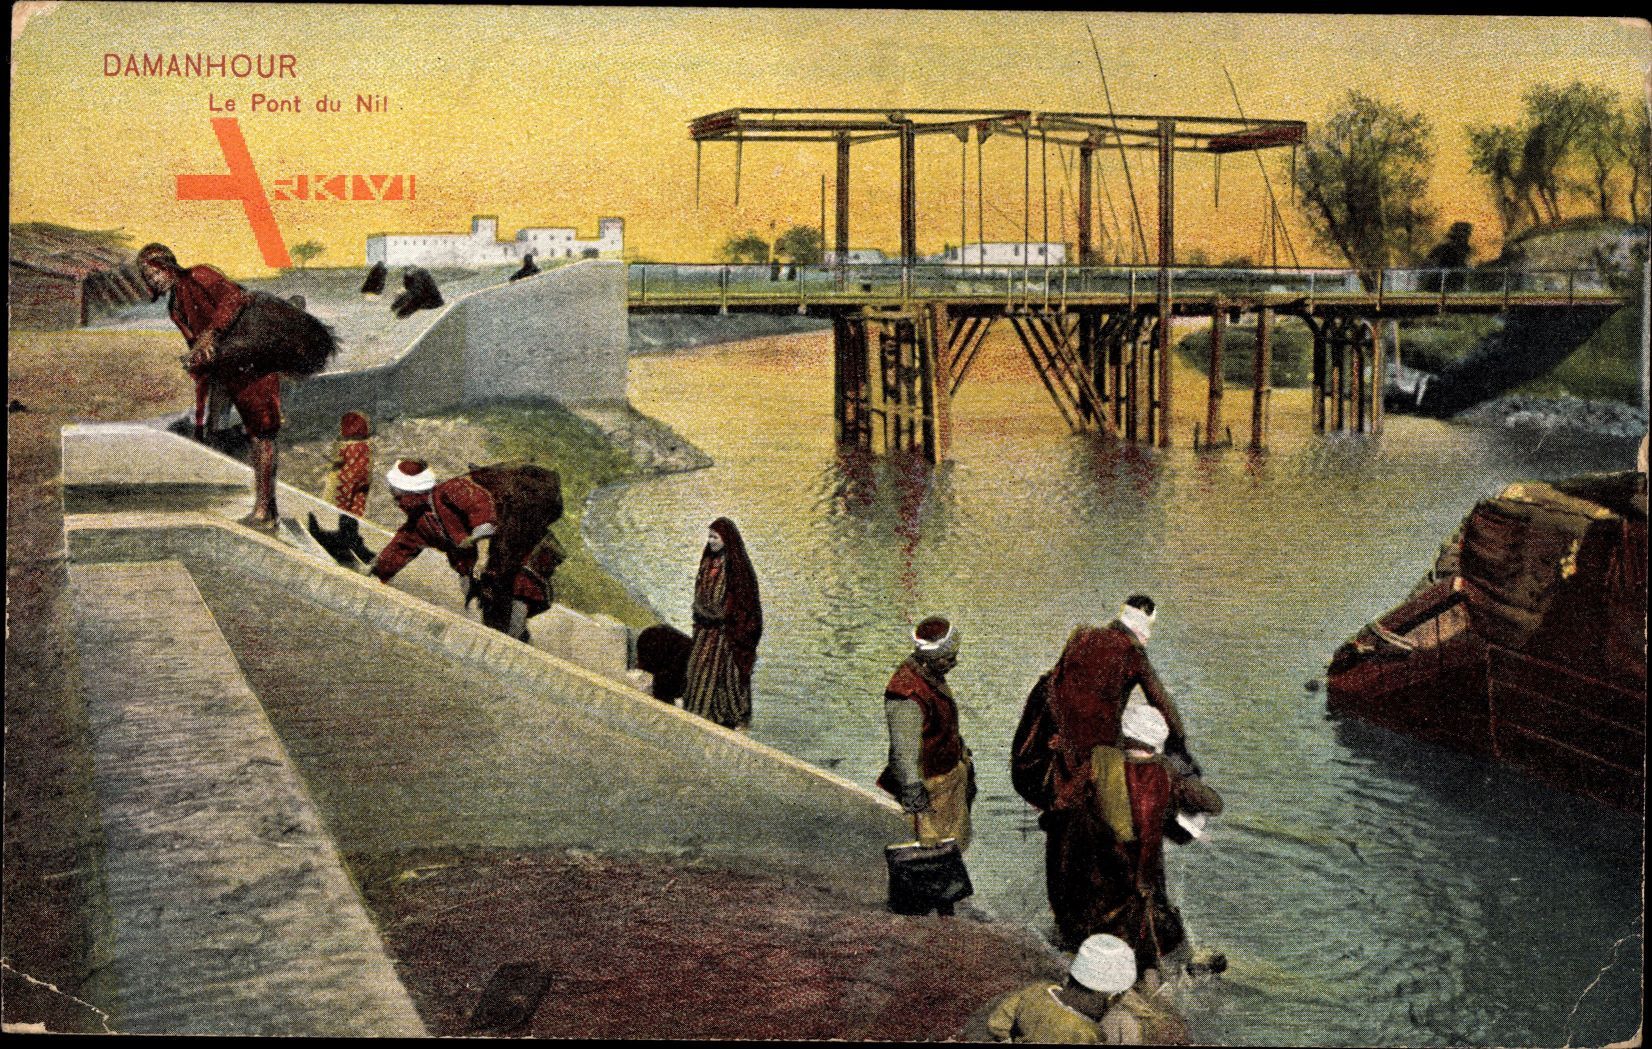 Damanhour Ägypten, Le Pont du Nil, Araber am Fluss, Brücke über den Nil